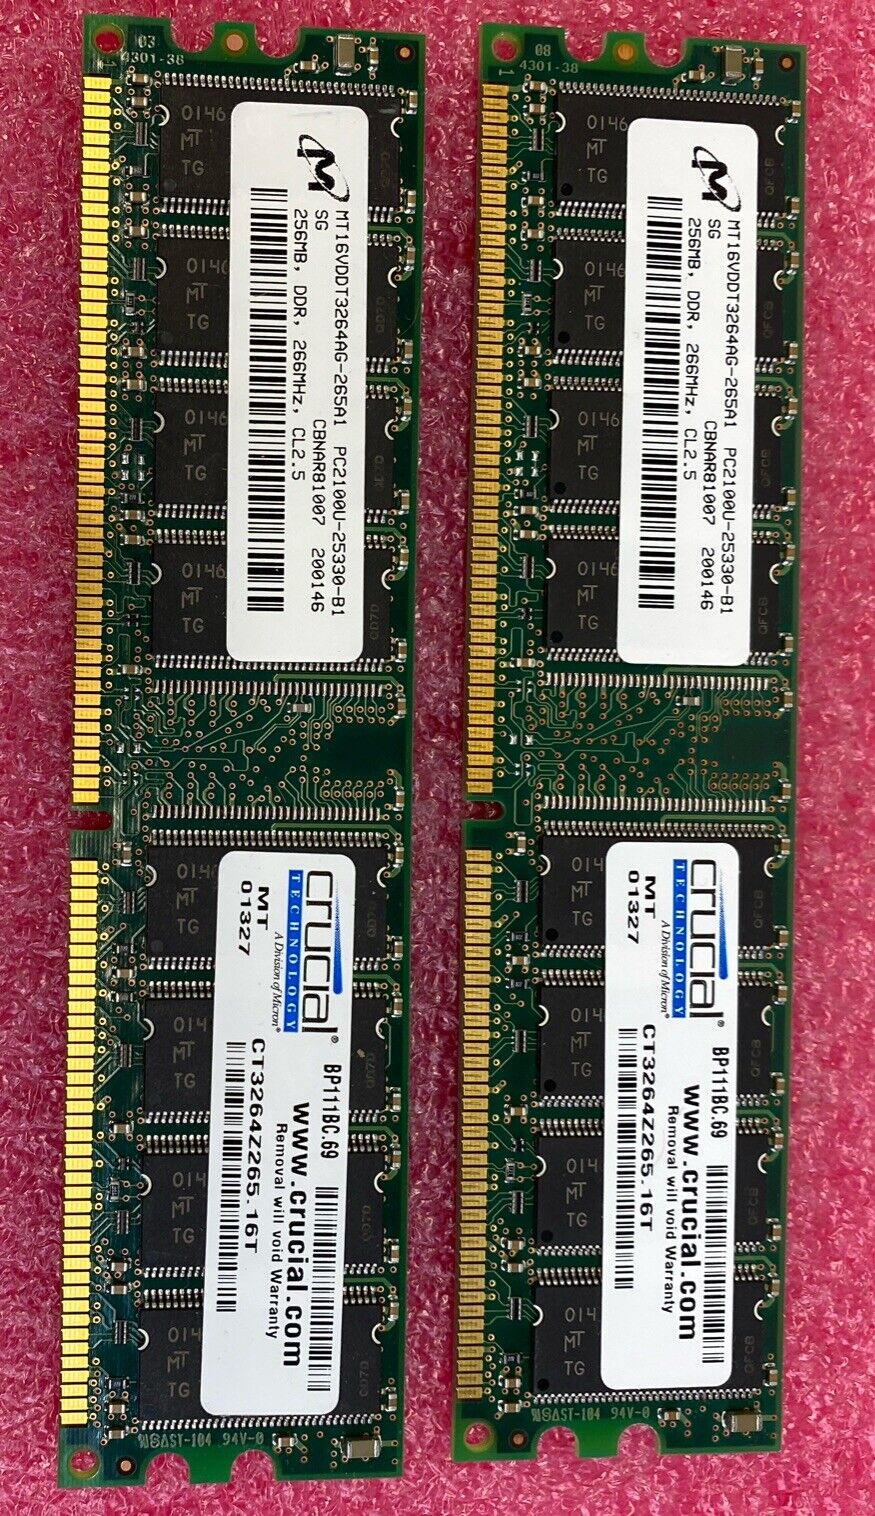 2x 256MB Micron MT16VDDT3264AG-265A1 PC2100U DDR 266MHz RAM Memory